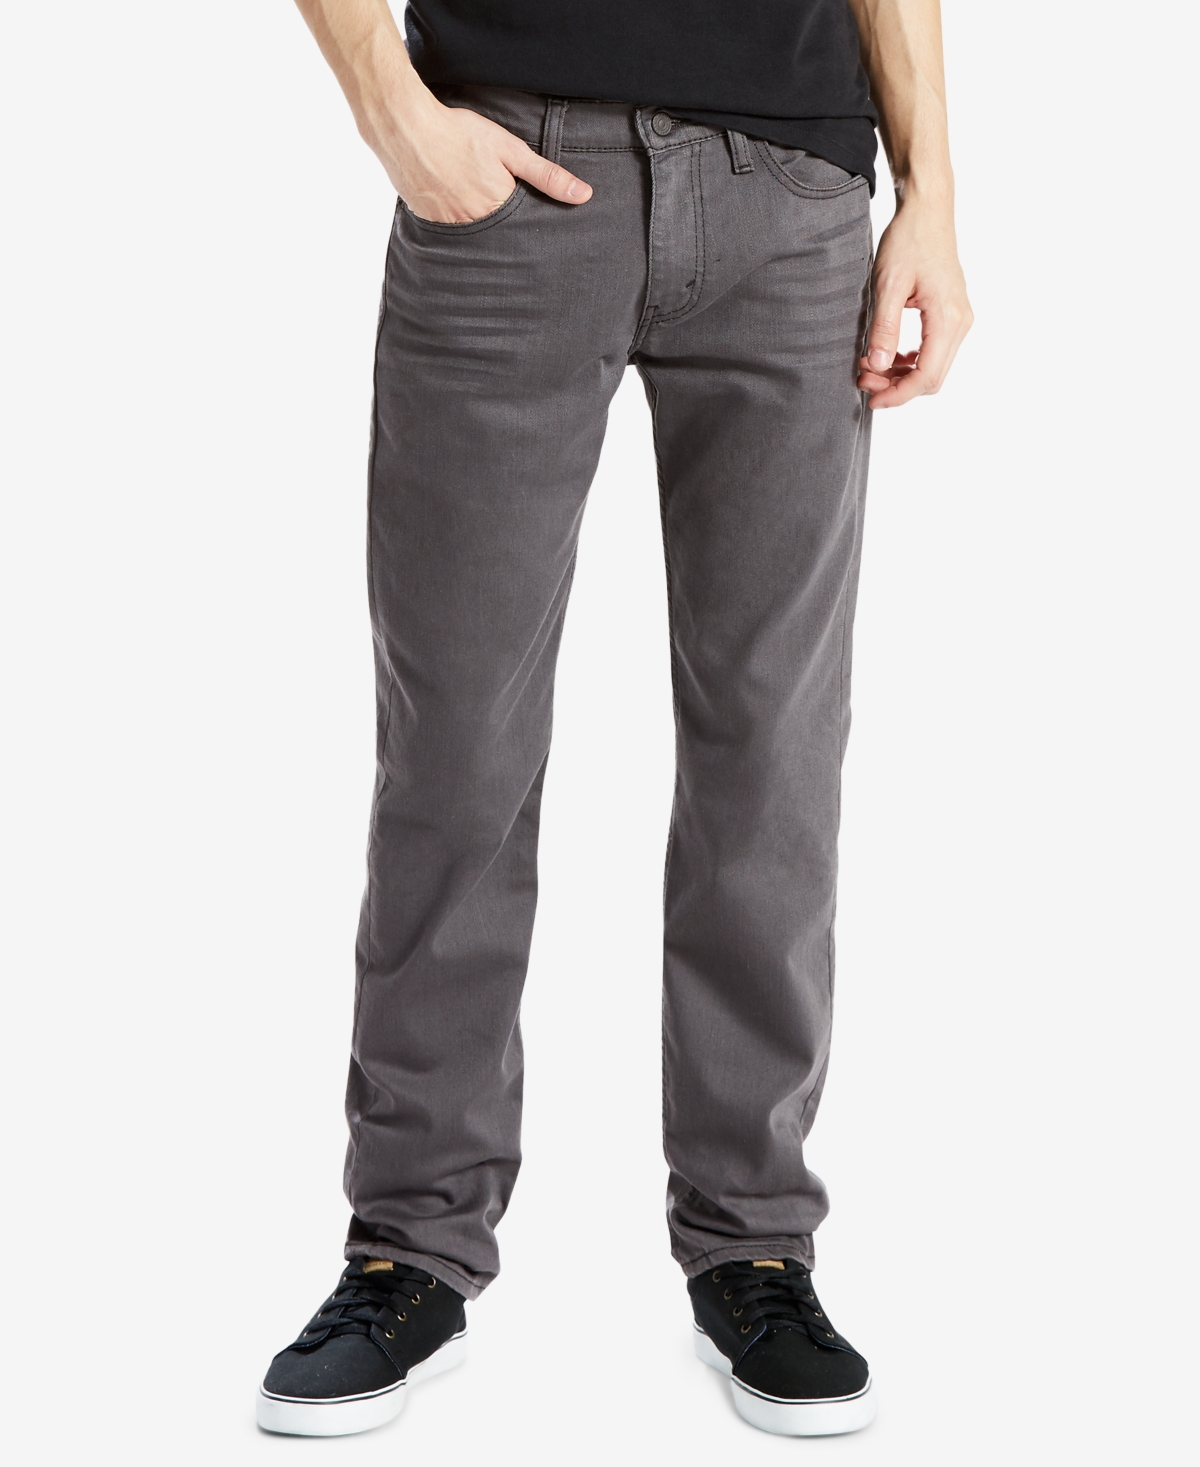 UPC 190416414352 product image for Levi's Men's 511 Slim Fit Jeans | upcitemdb.com